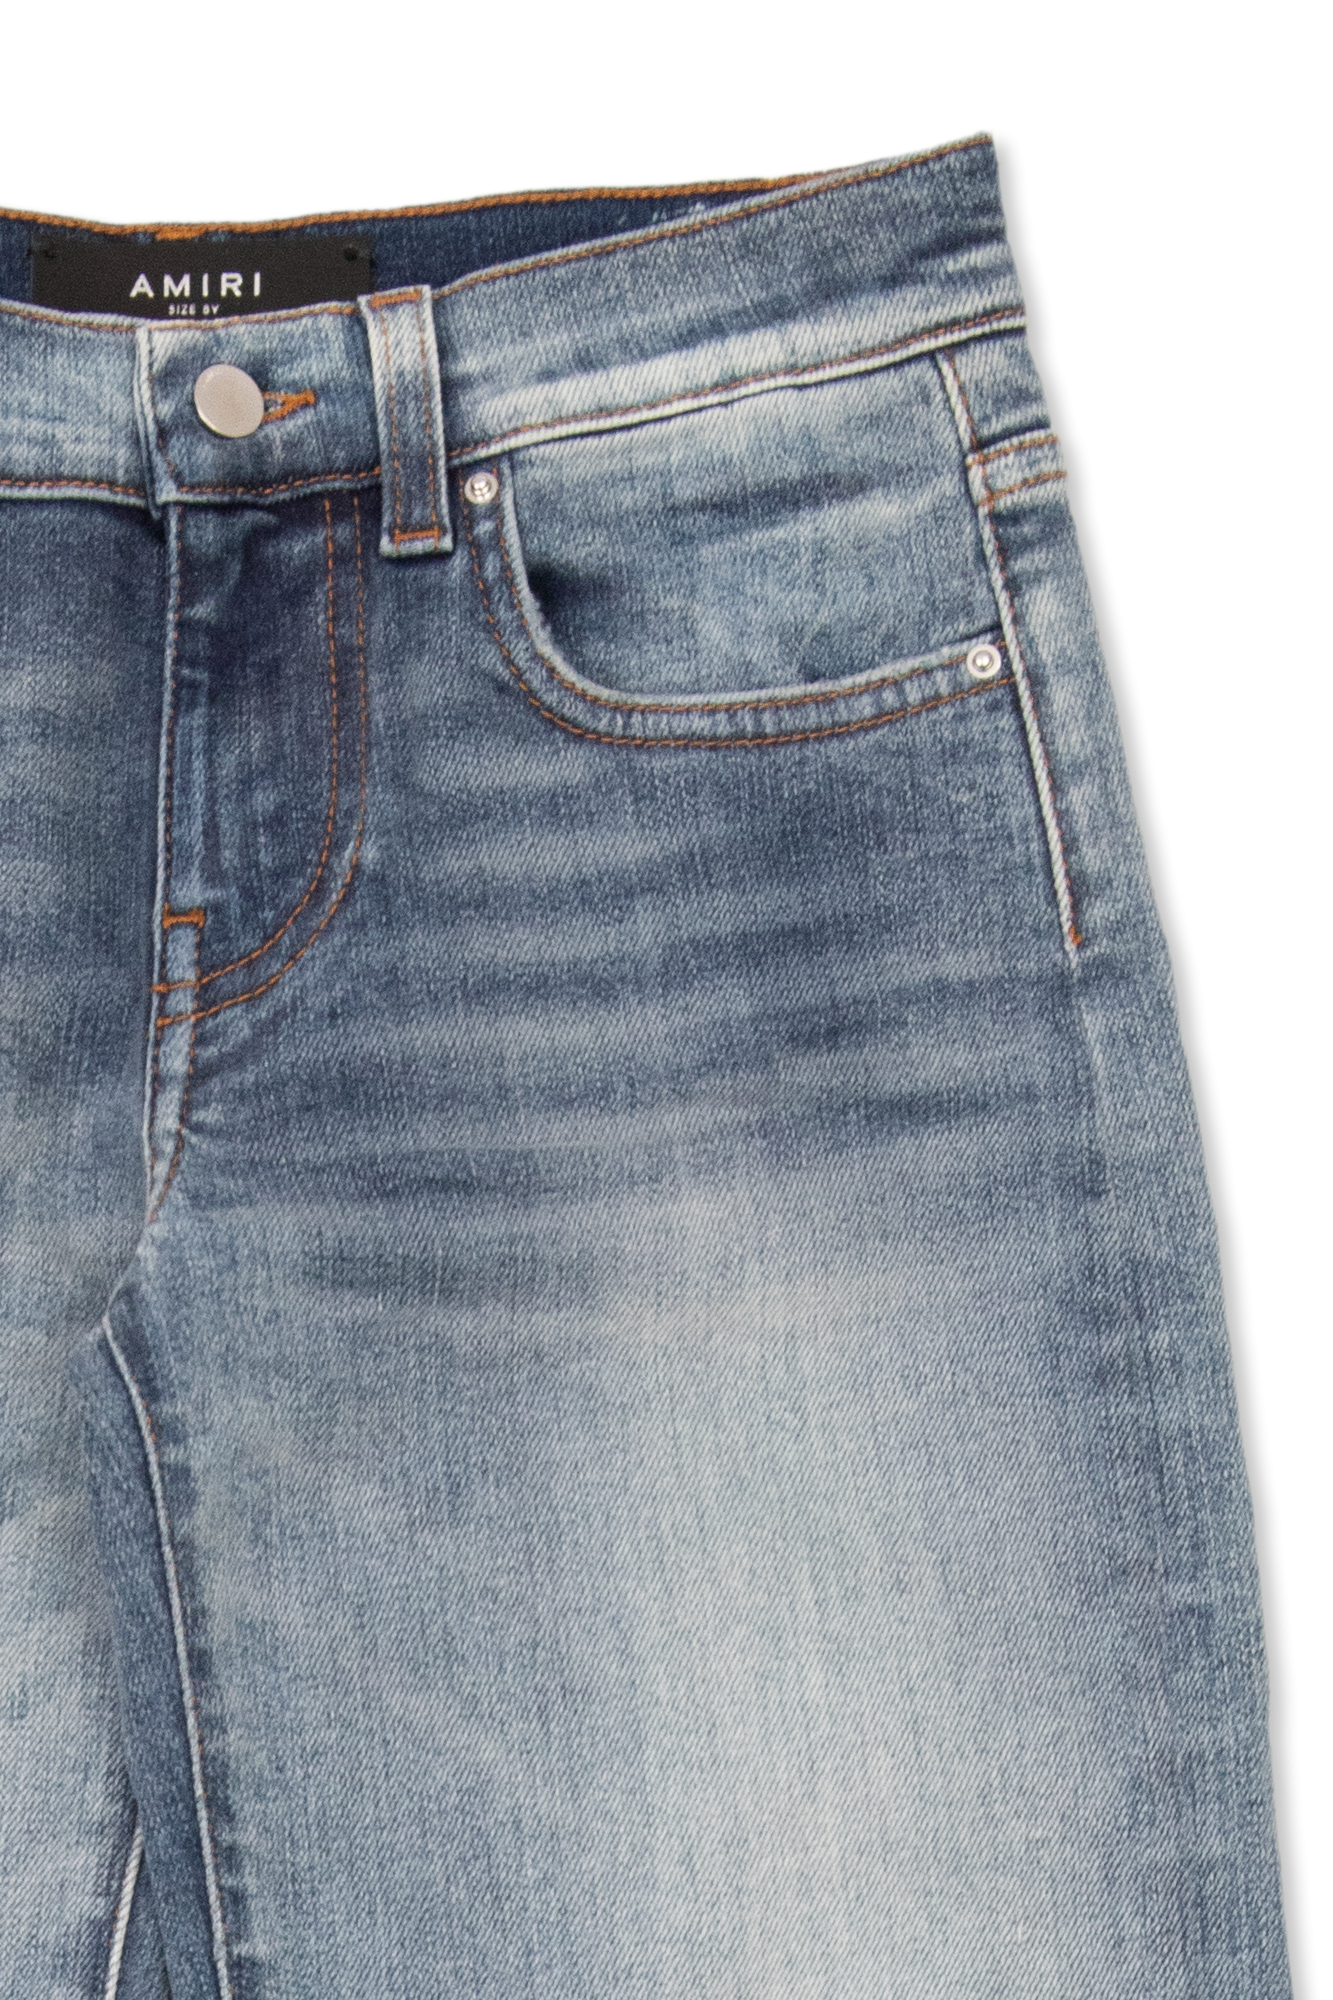 Amiri Kids jeans with pockets maison margiela buy trousers